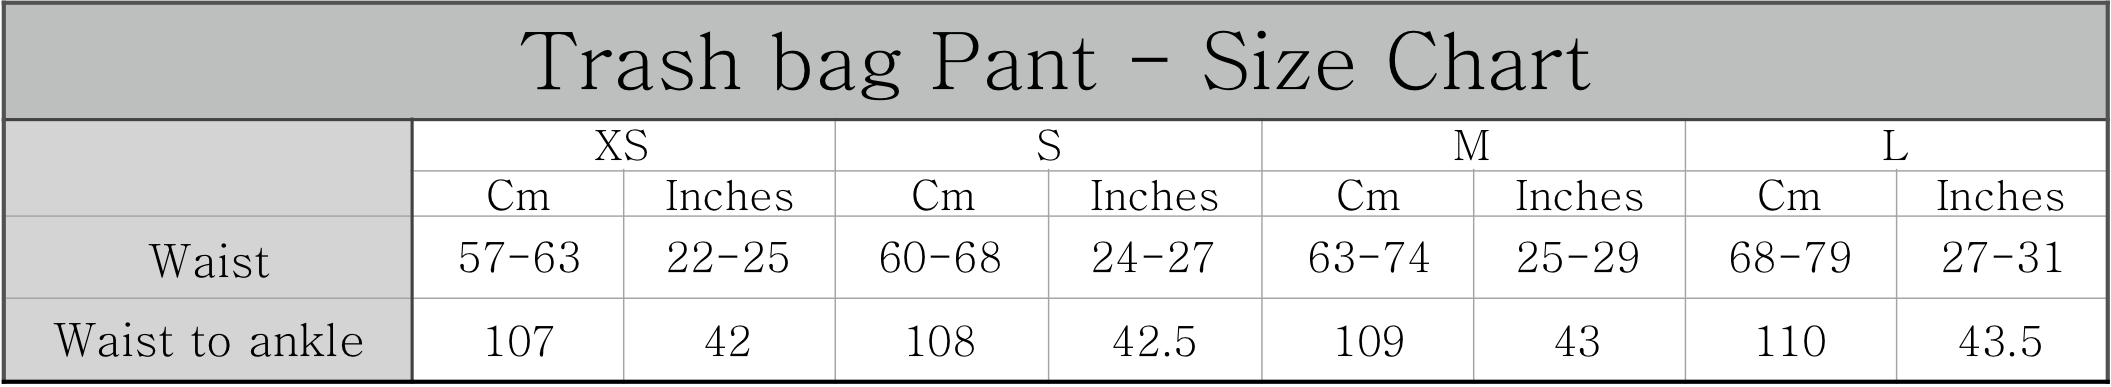 Trash bag Pant - Size Chart - PNG